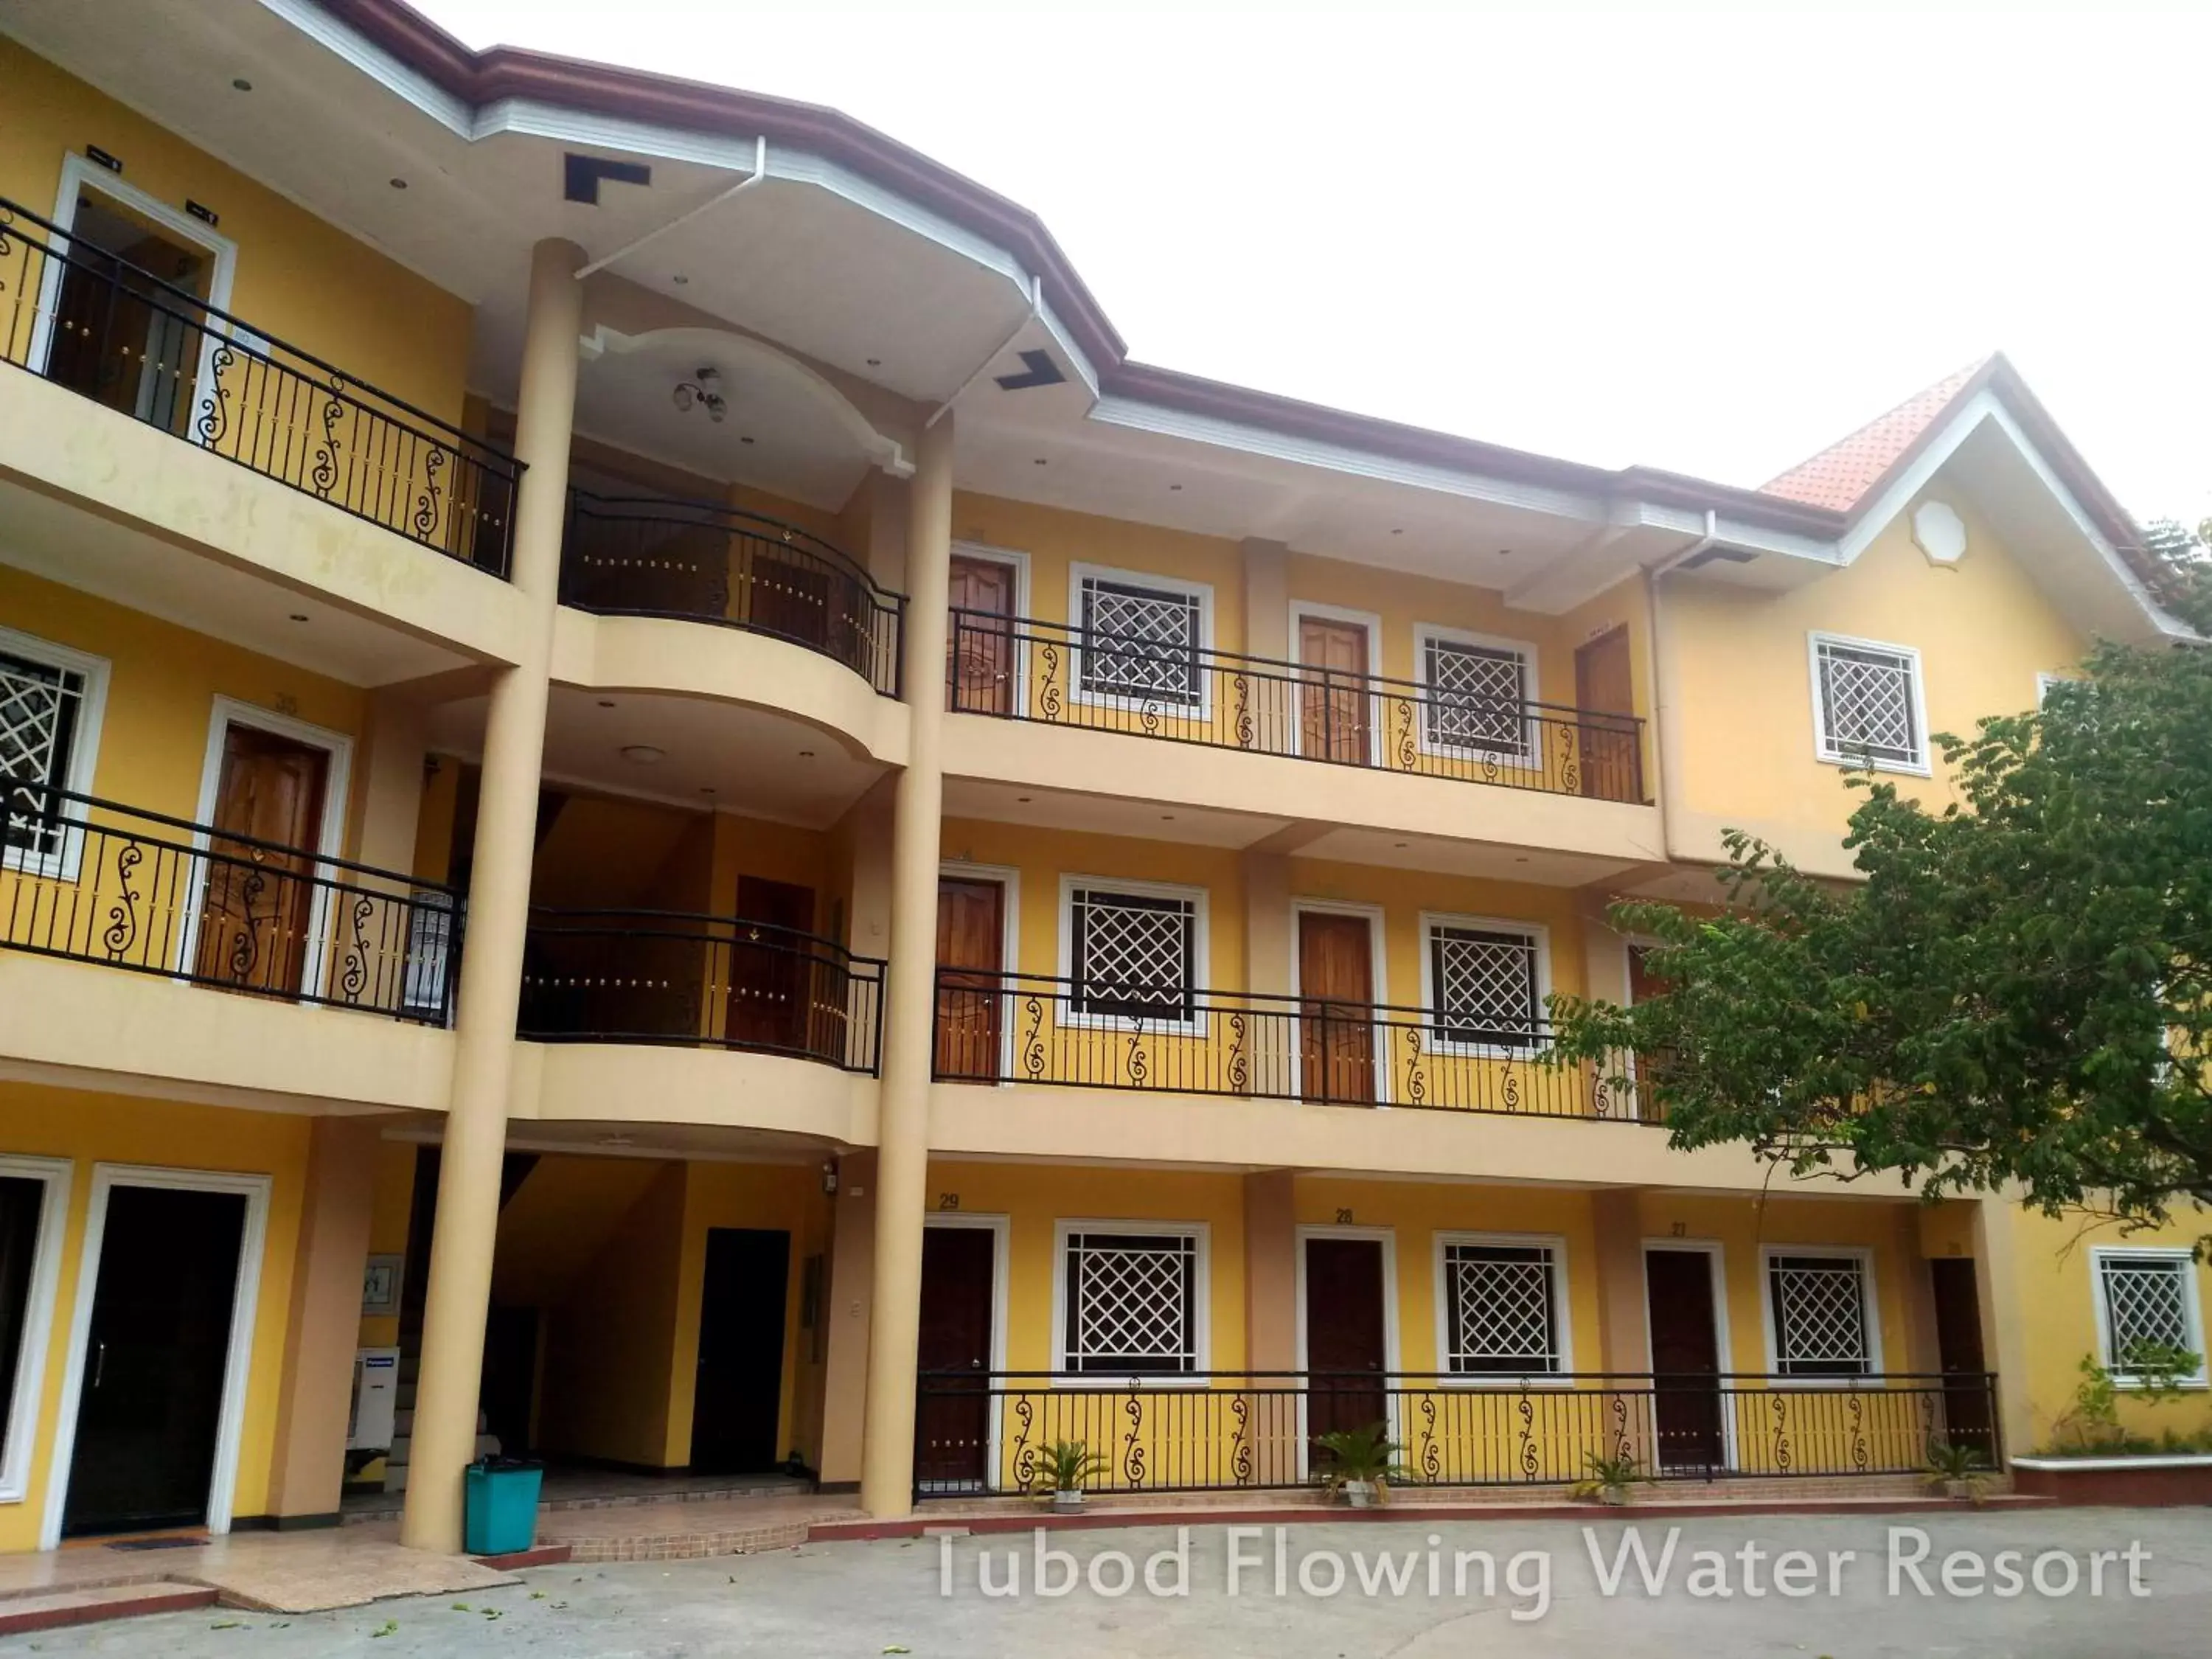 Property Building in Tubod Flowing Water Resort